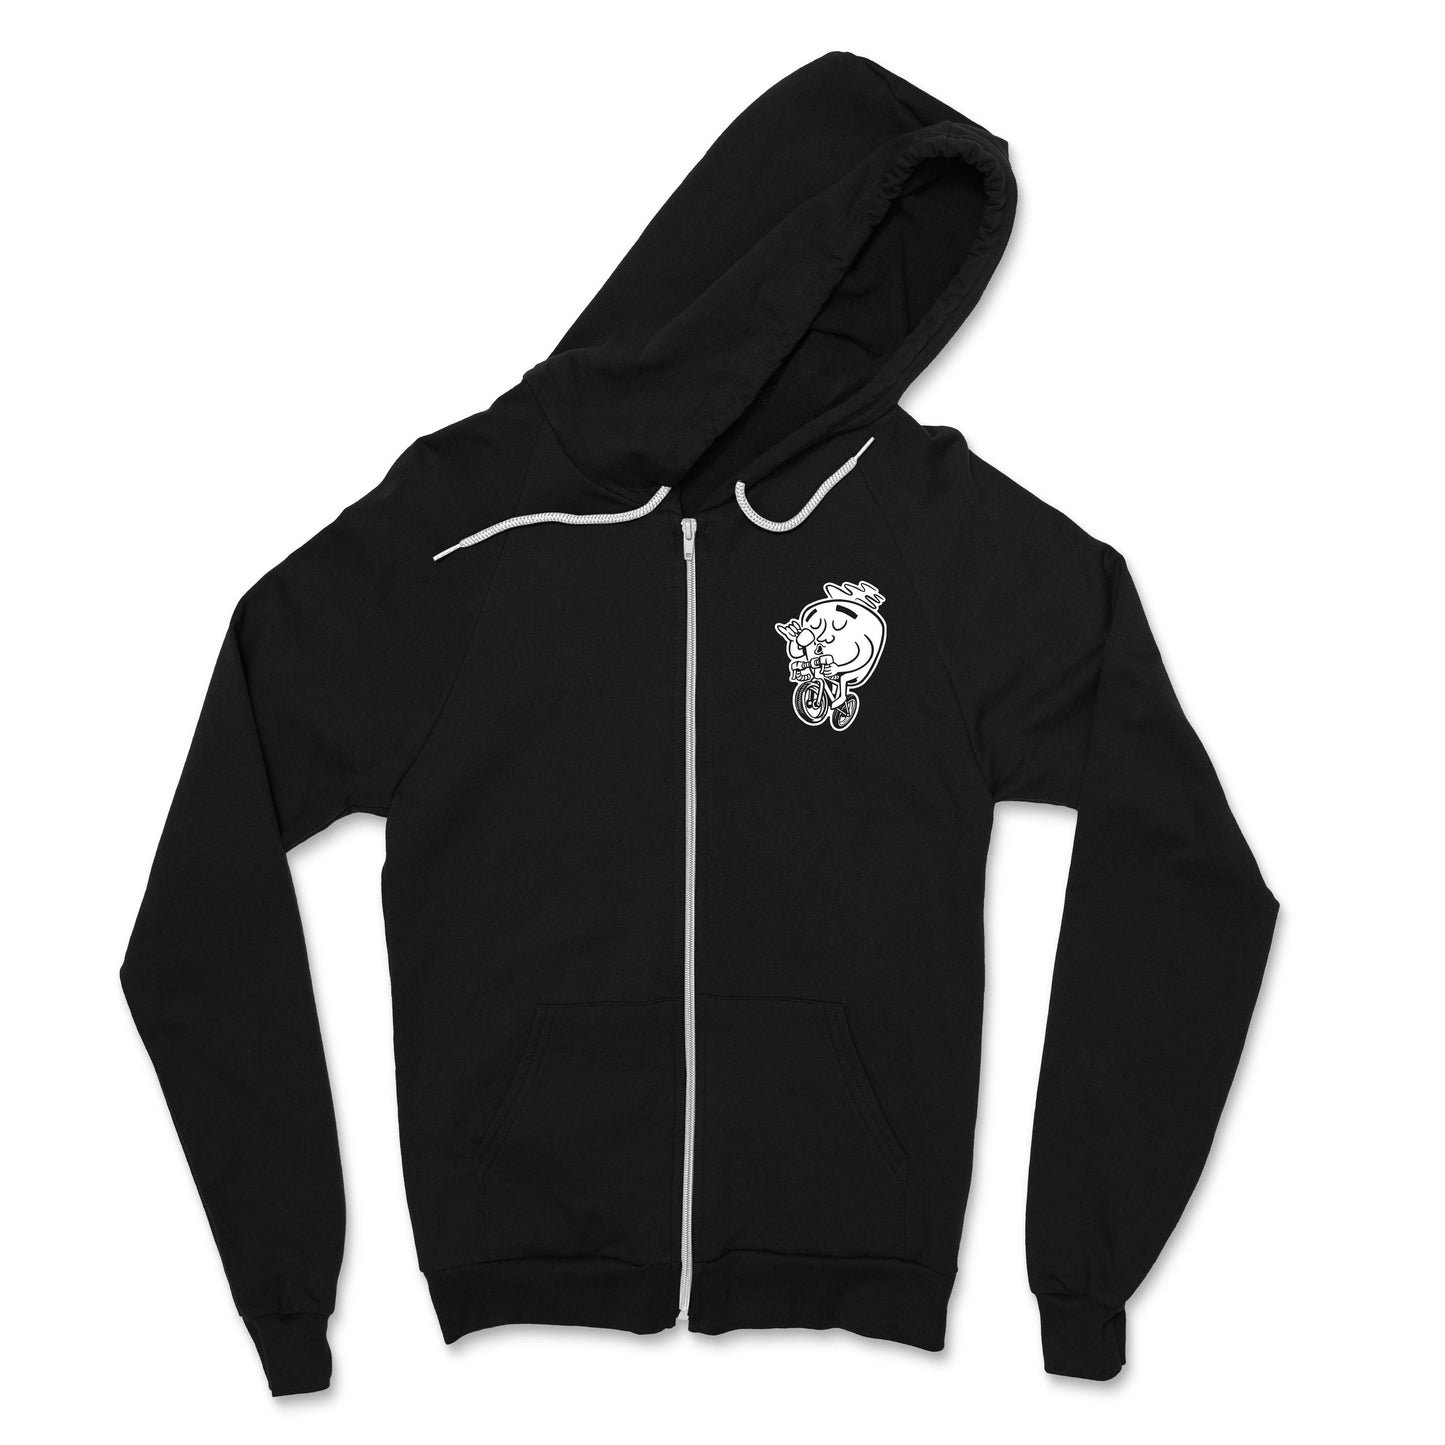 Chain & Spoke Black Full-Zip Hooded Sweatshirt (Long Sleeve)